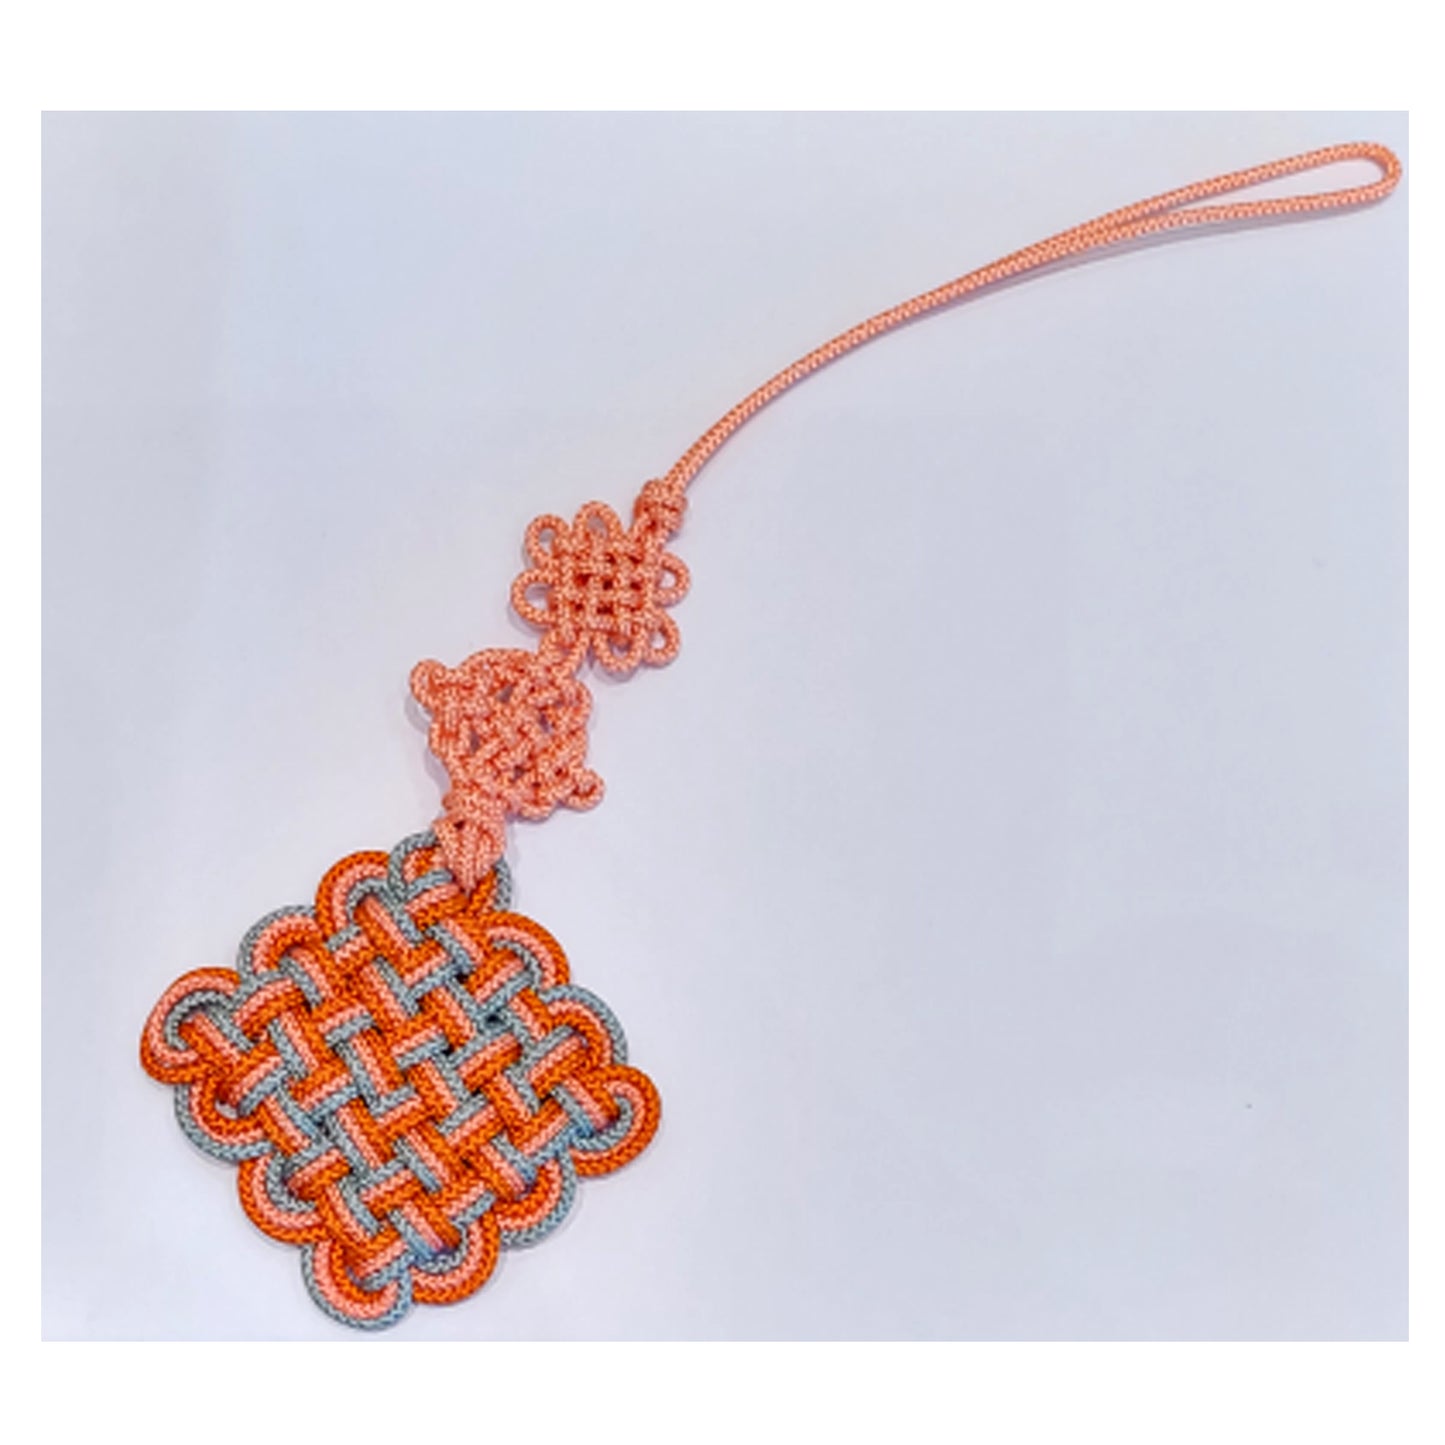 Handmade Keyring, Charm, Ornament, Korean Traditional Knot, Orange Color